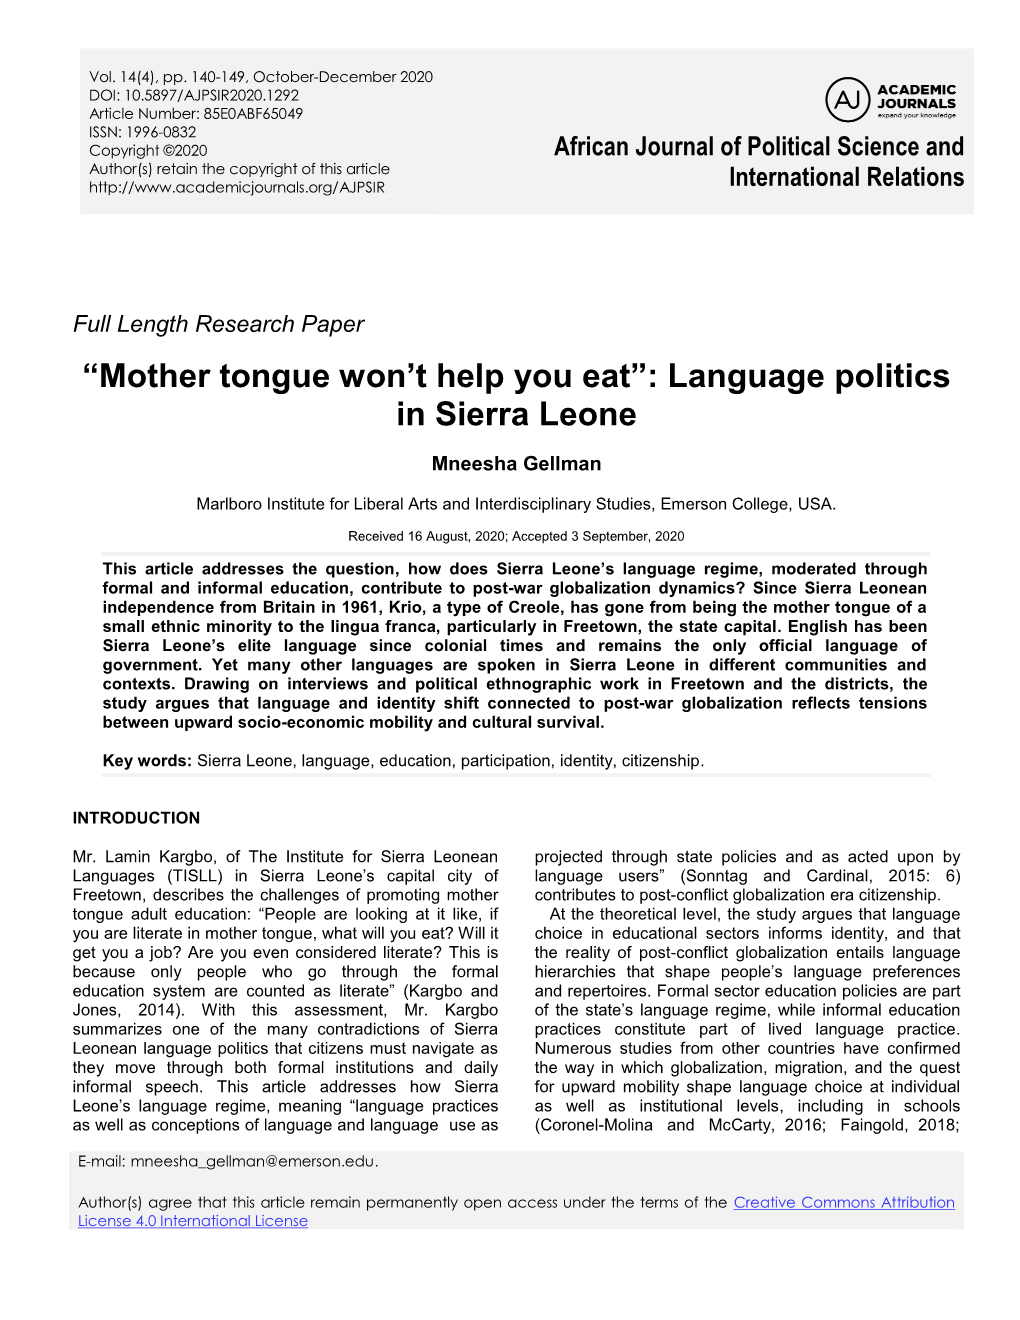 Language Politics in Sierra Leone